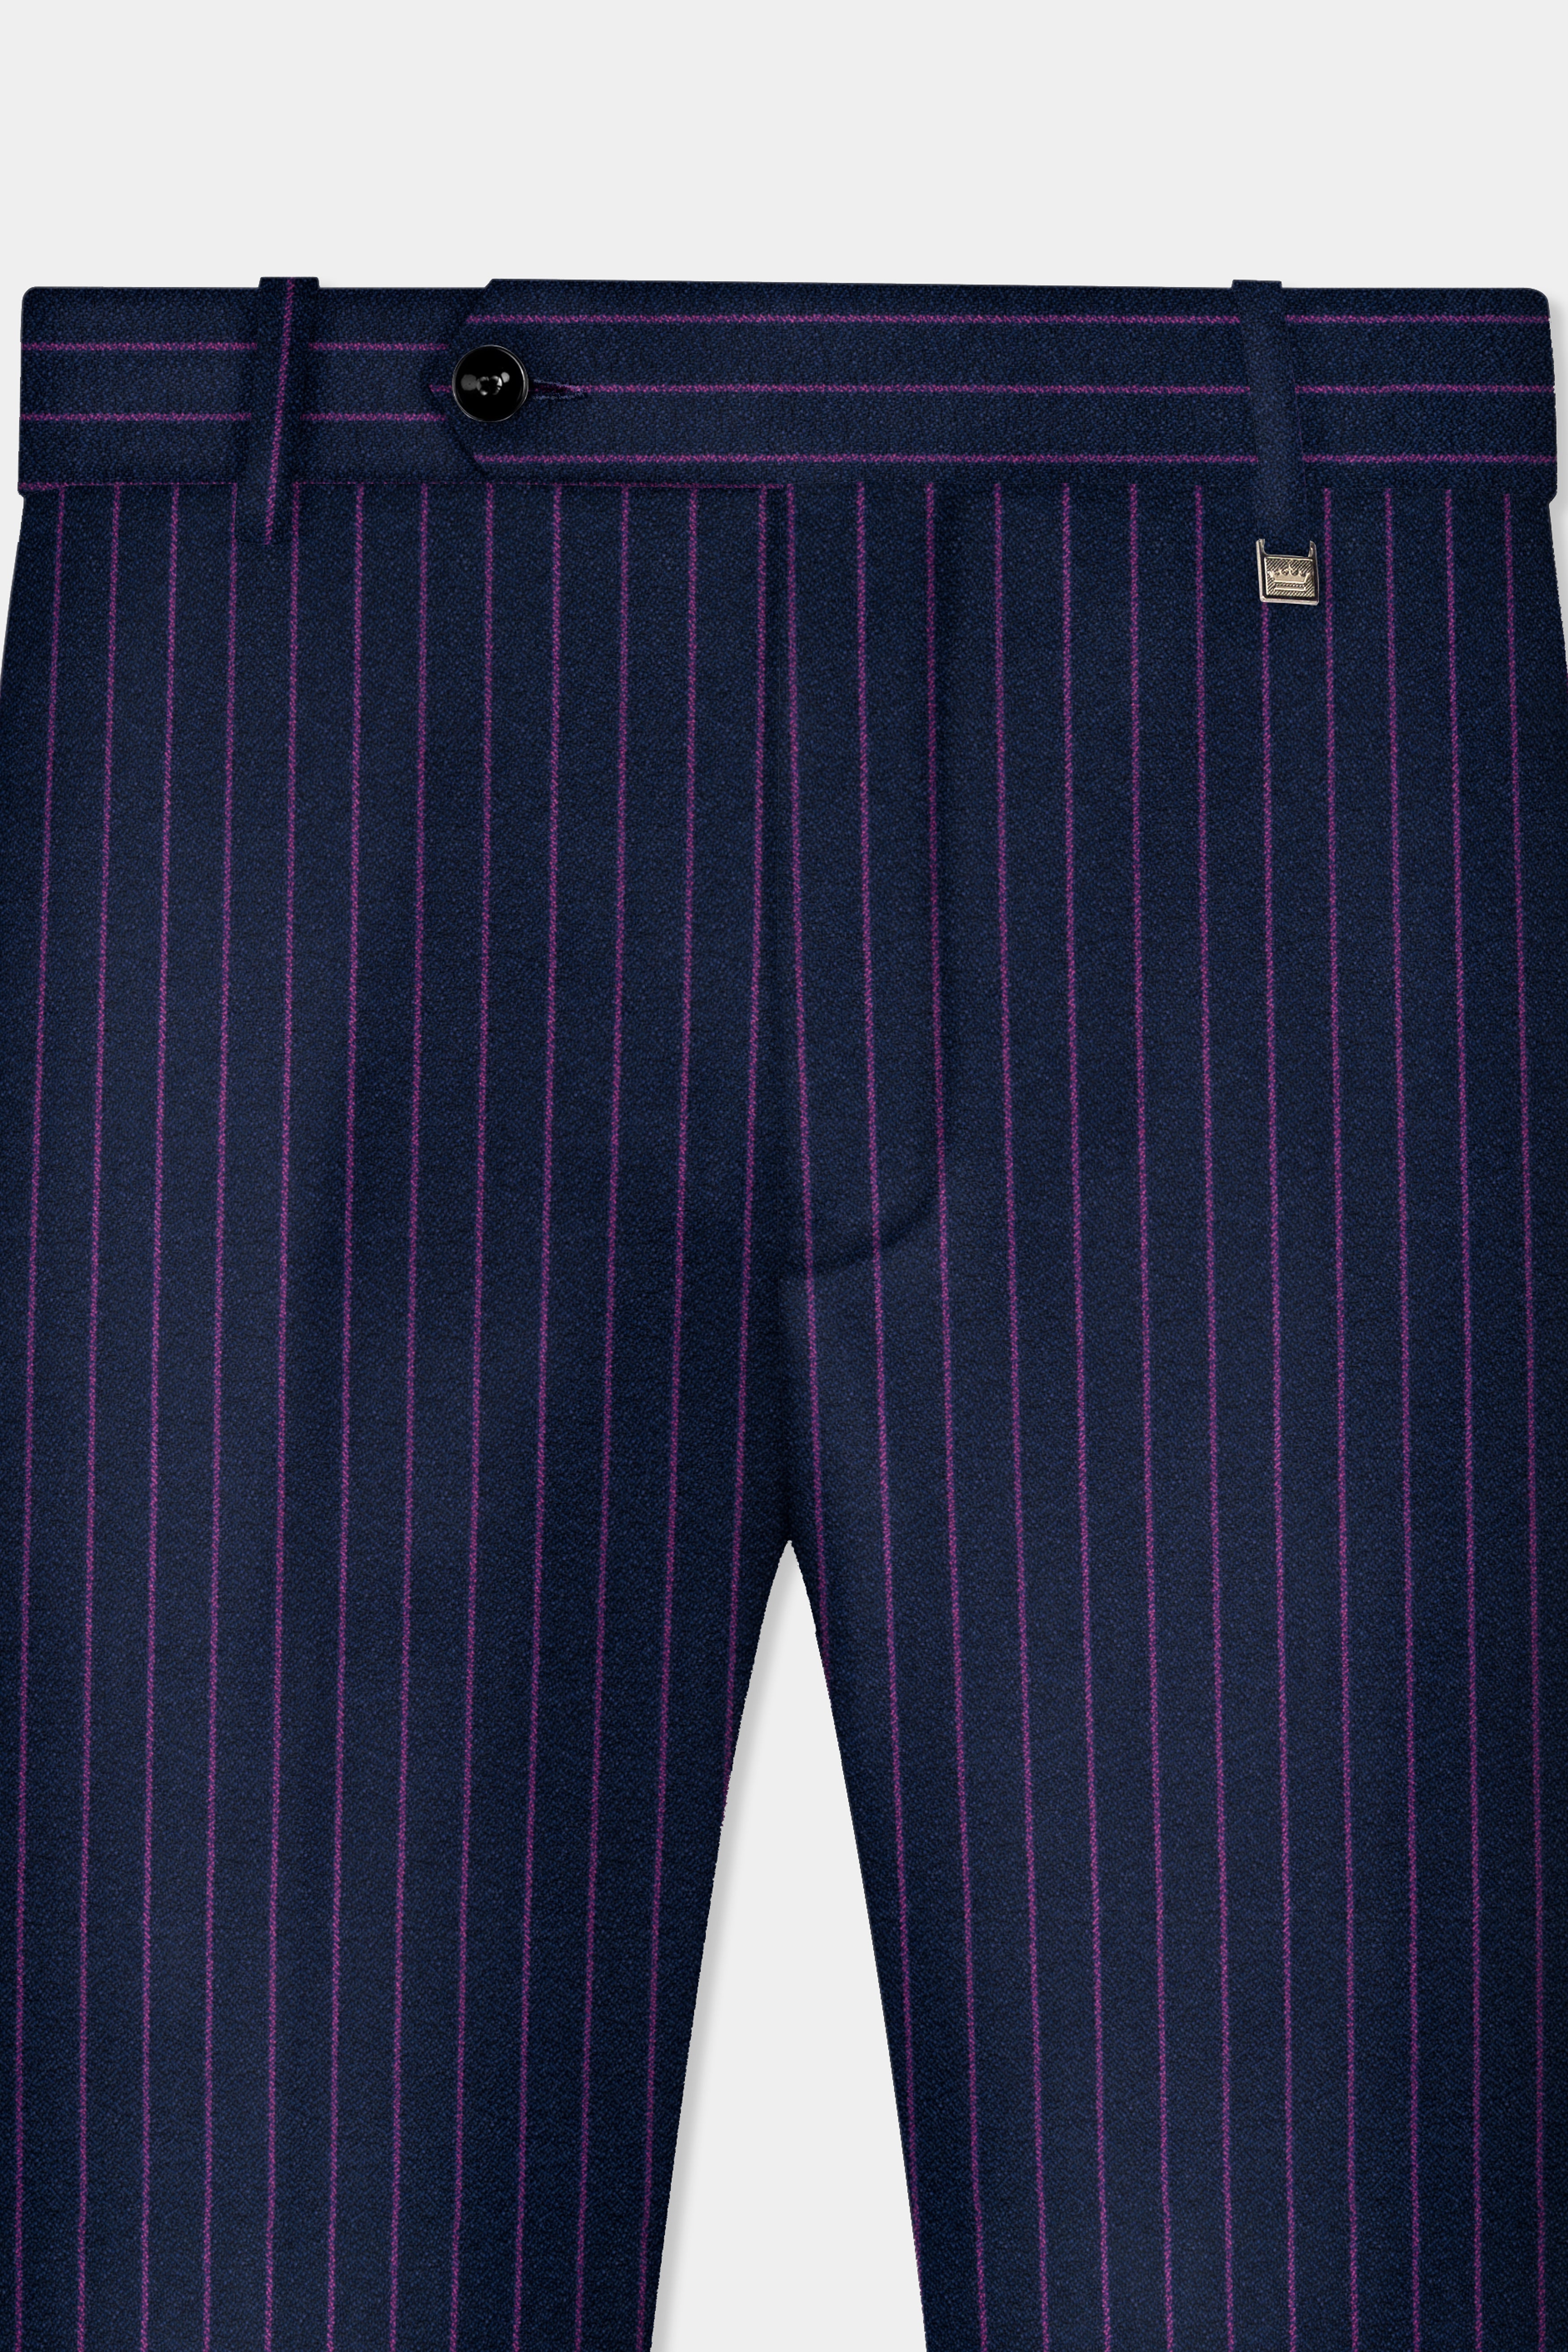 Steel Blue with Grape Purple Striped Wool Blend Pant